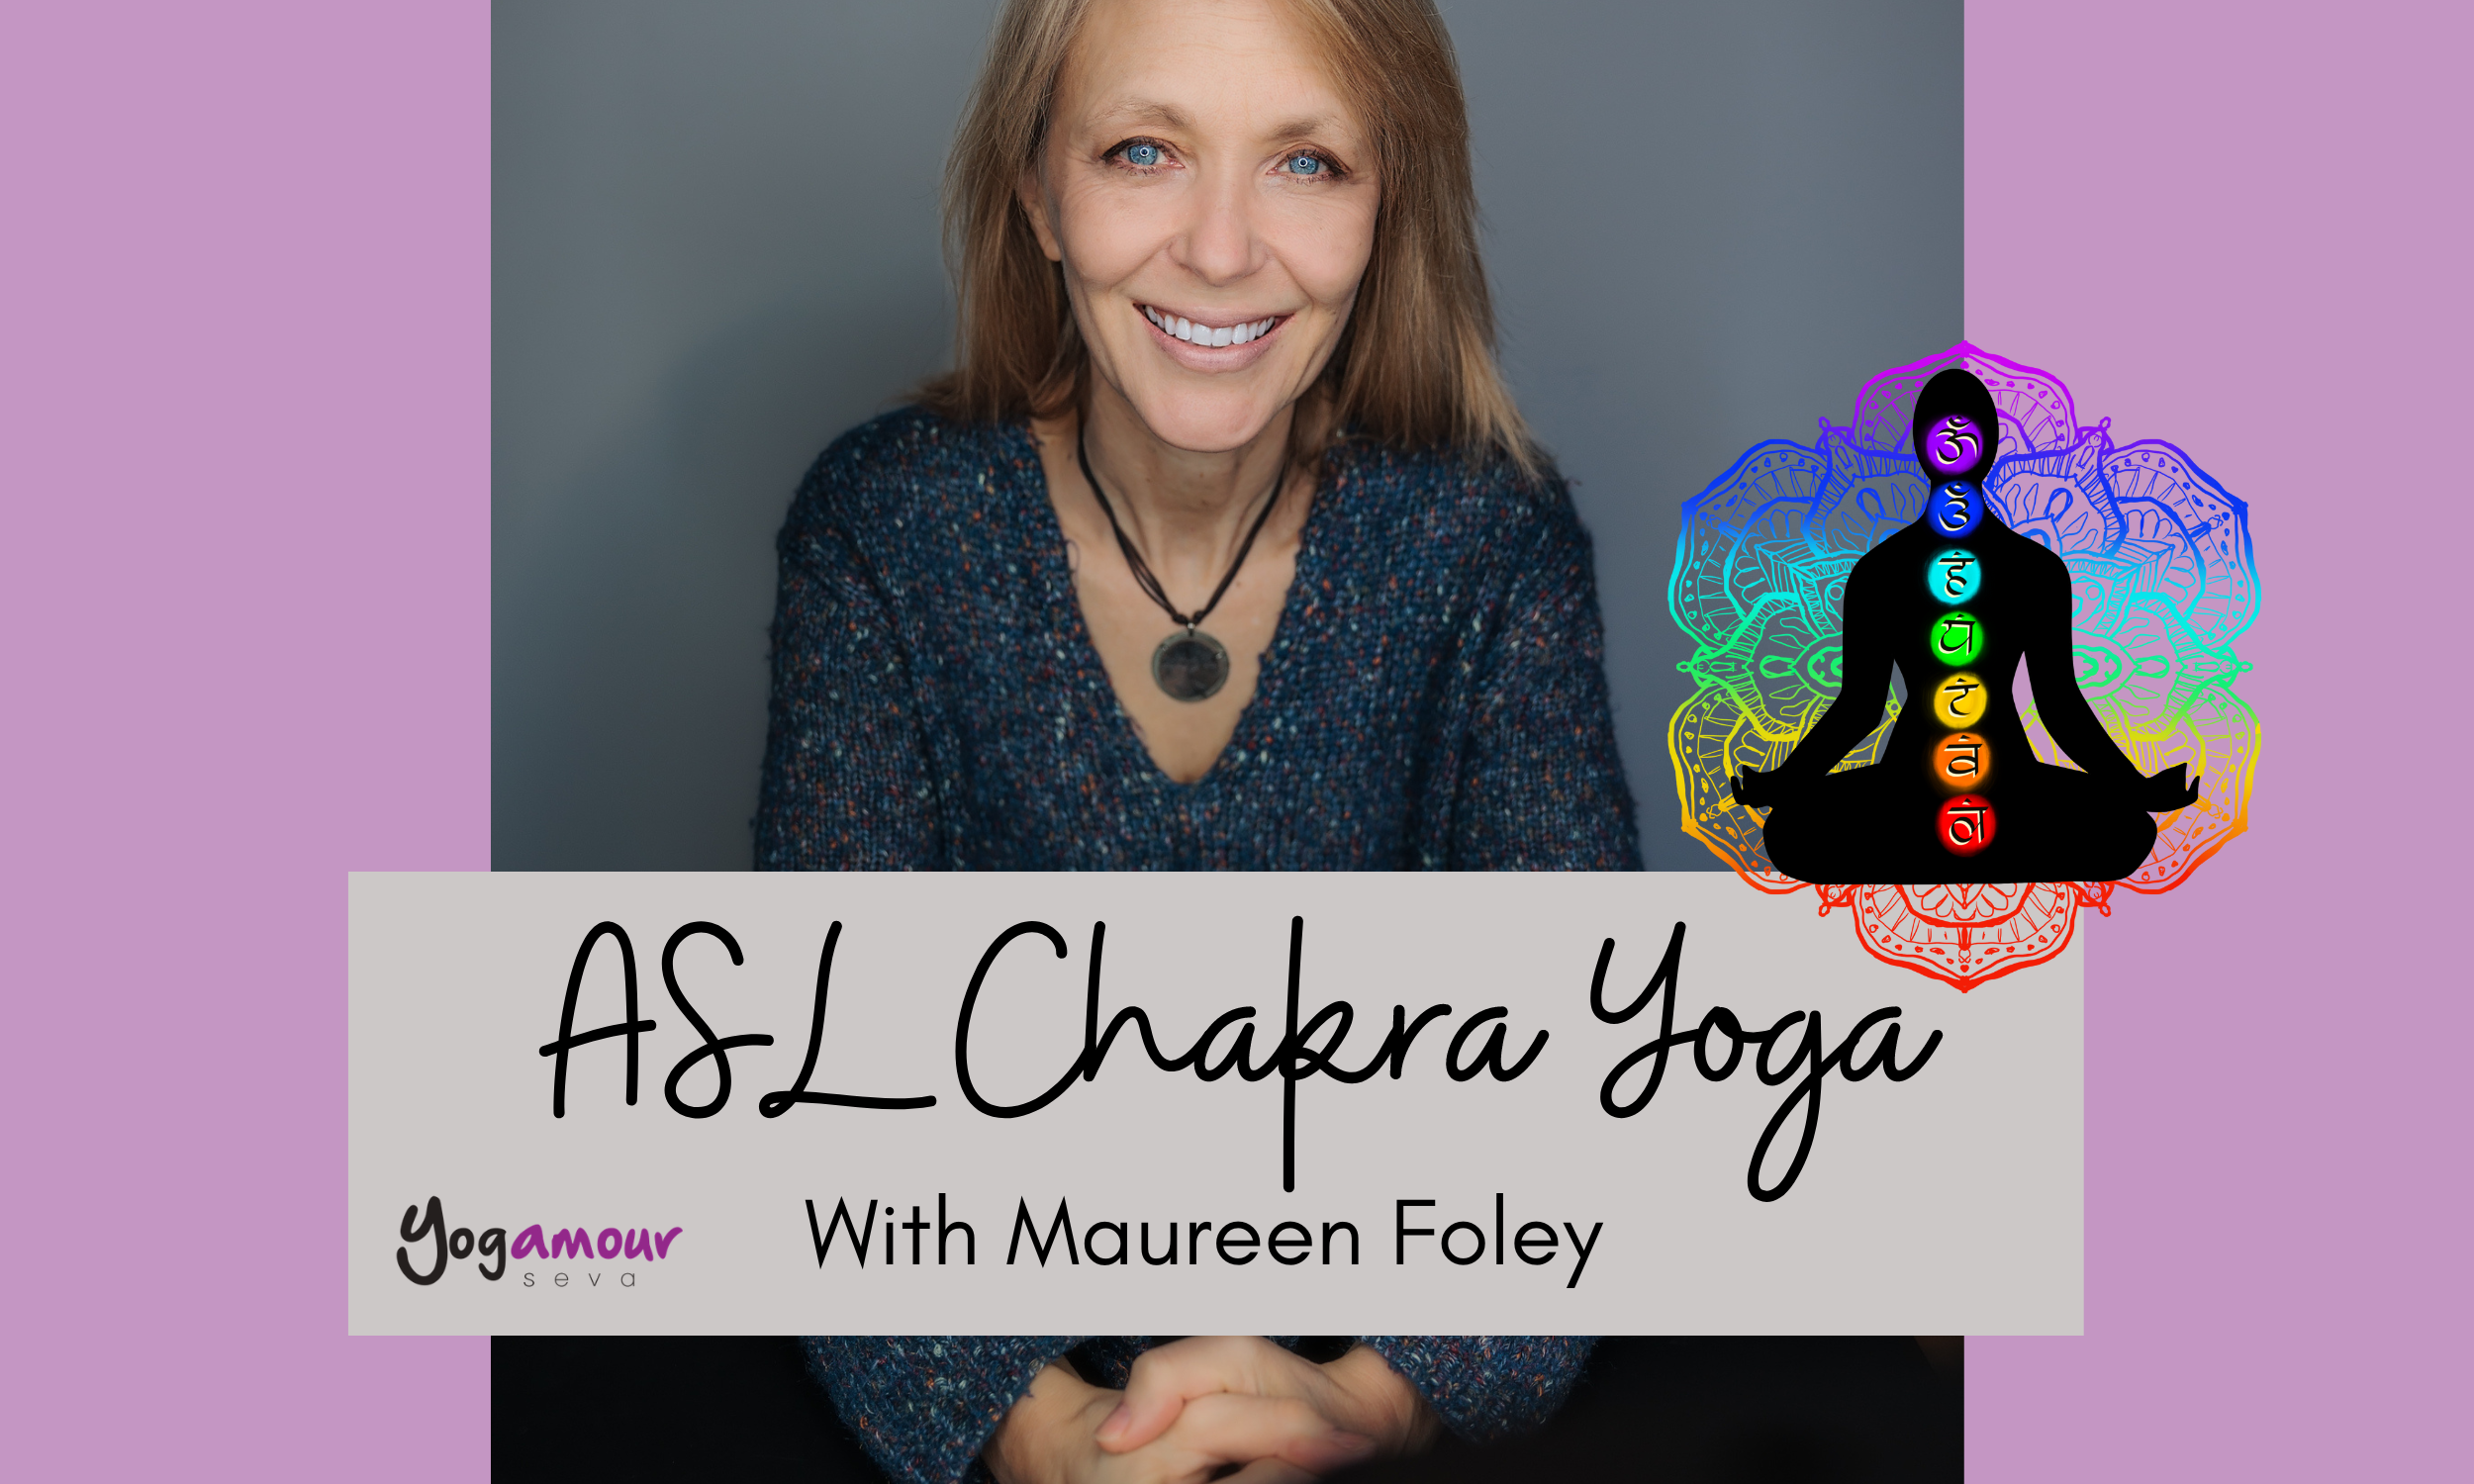 Deaf Yoga for Beginners, Lila Lolling